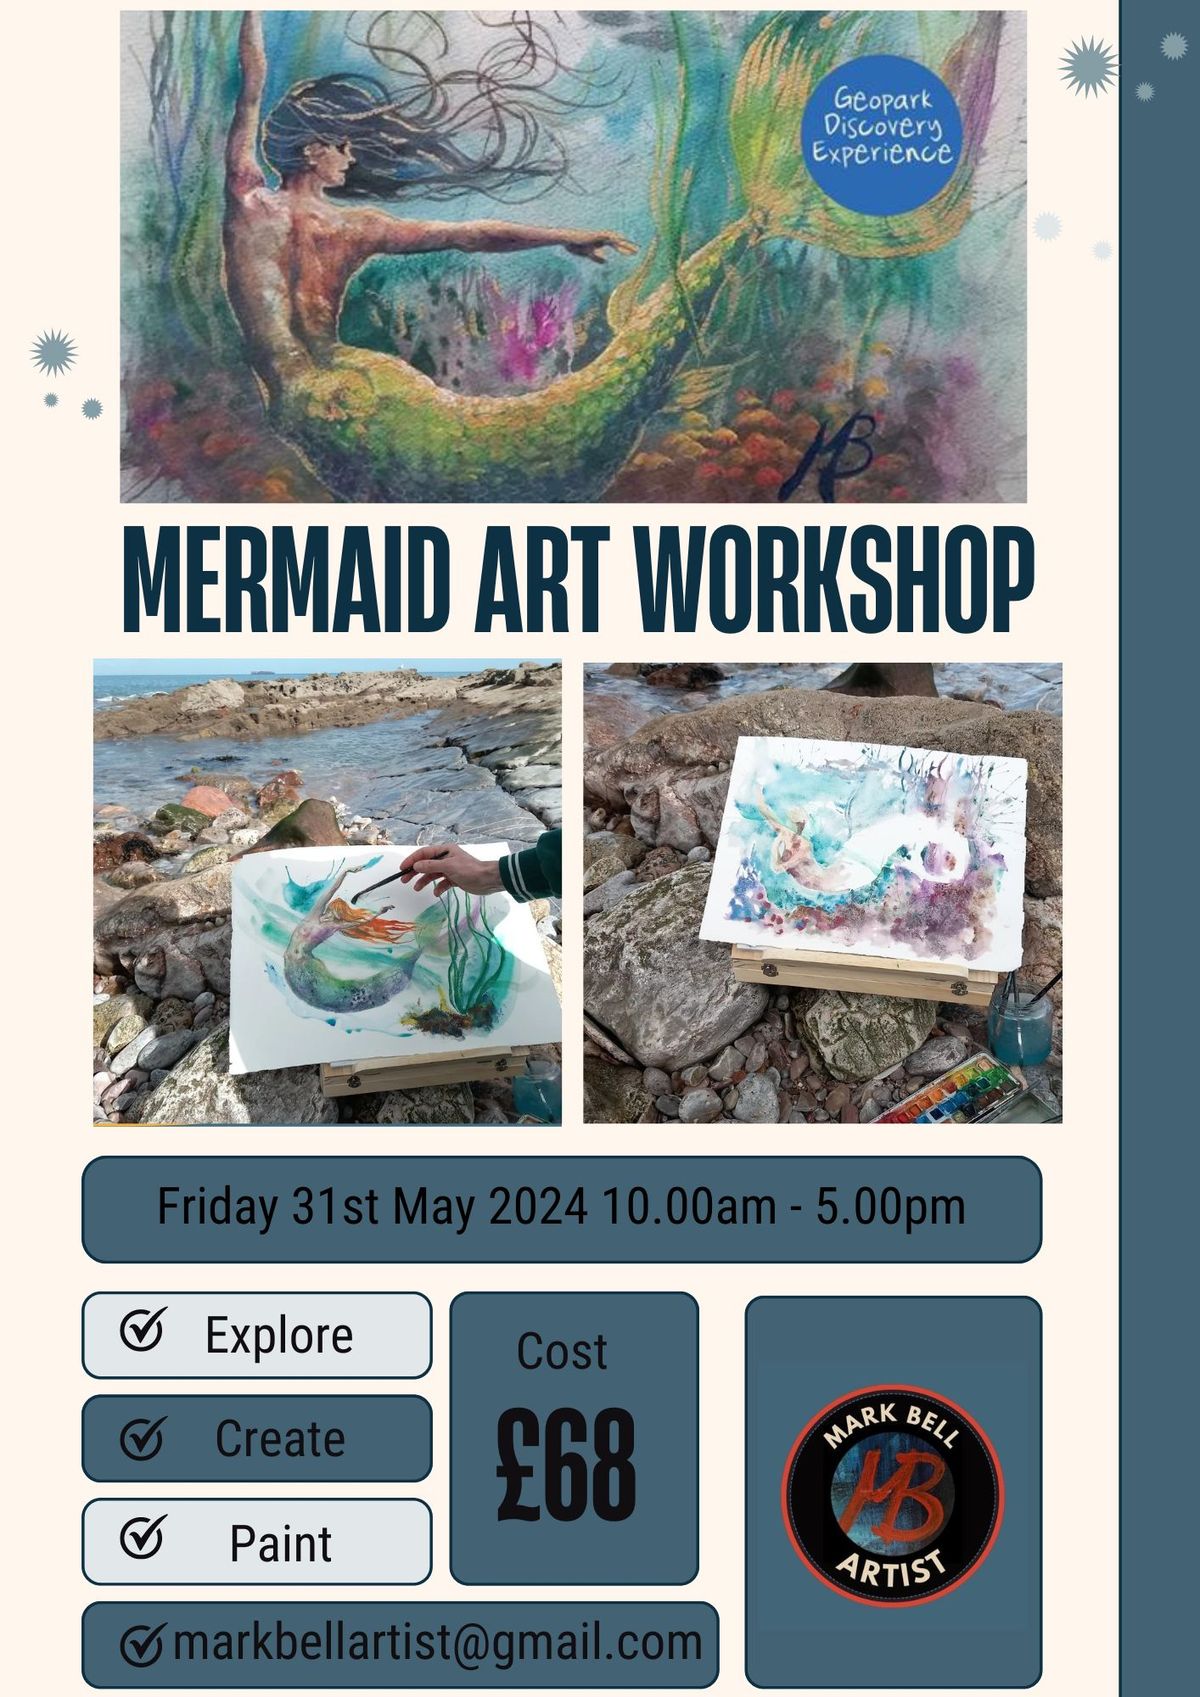 Mermaid Art Workshop with Mark Bell - Brixham - Friday 31st May 2024